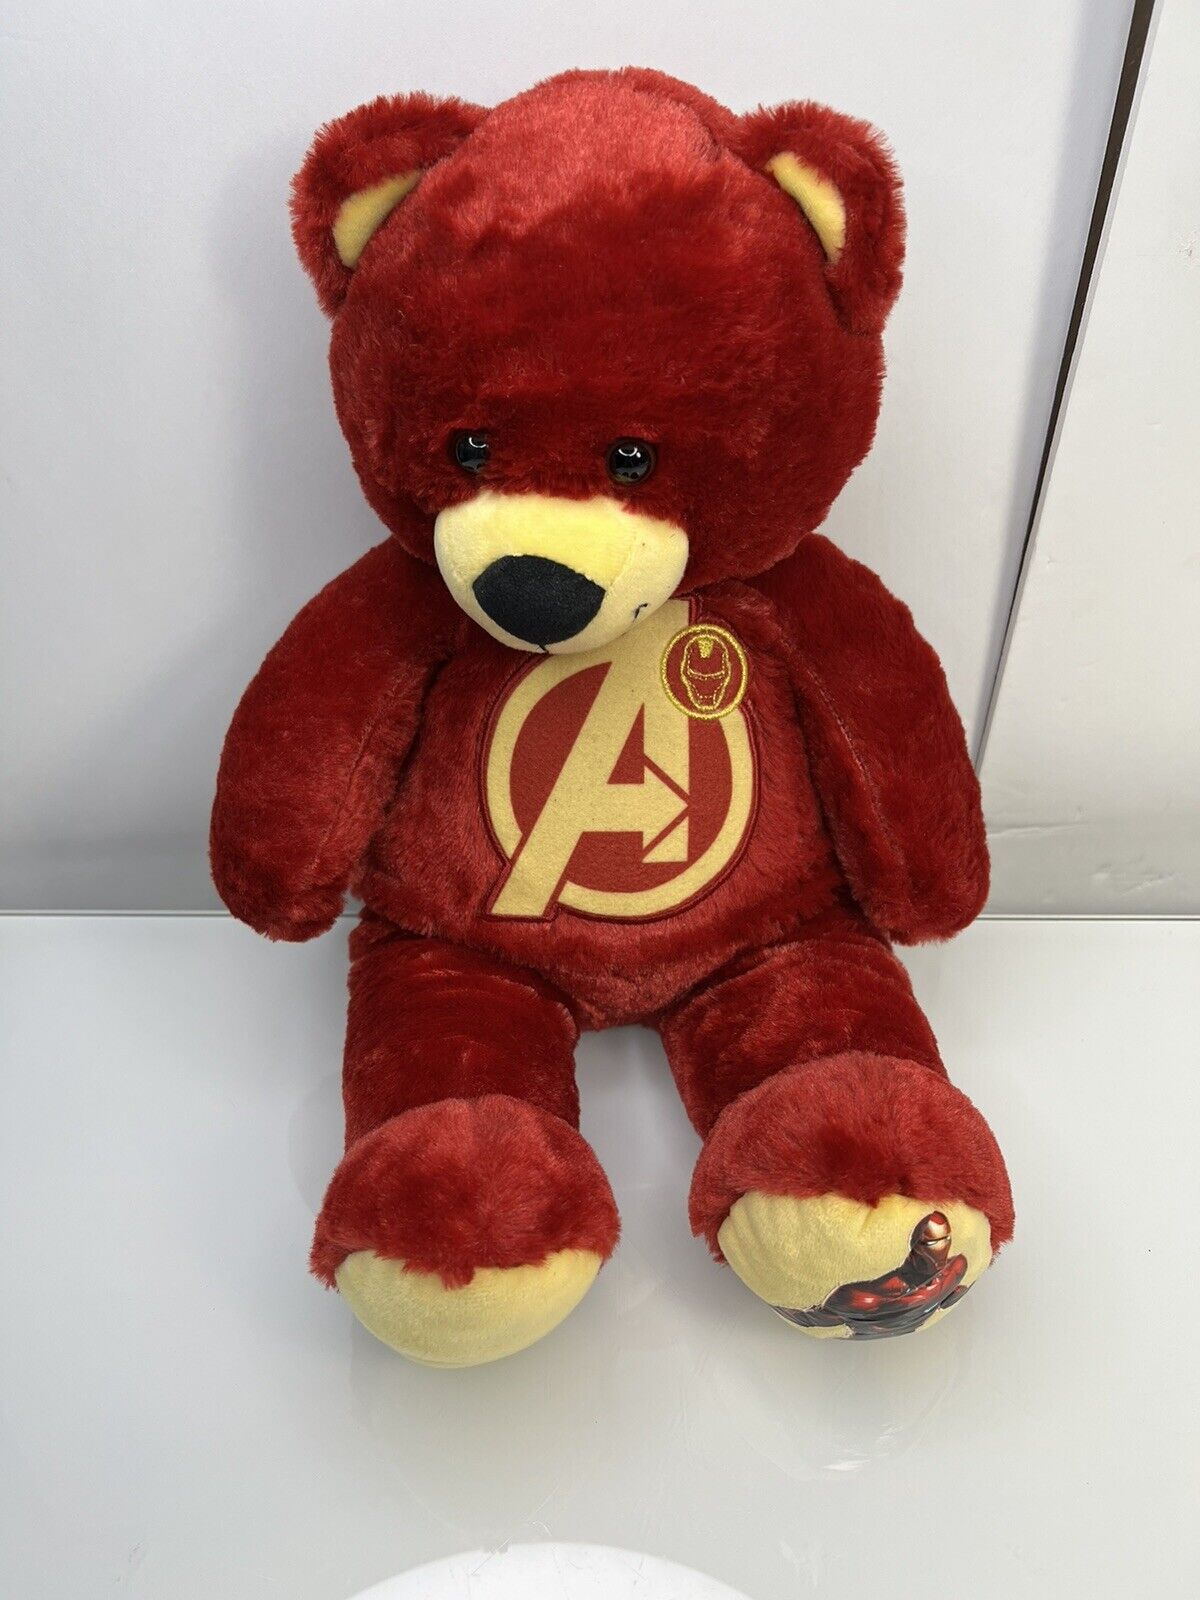 BAB Iron Man Bear 16" Plush Marvel Avengers Endgame Build A Bear Red